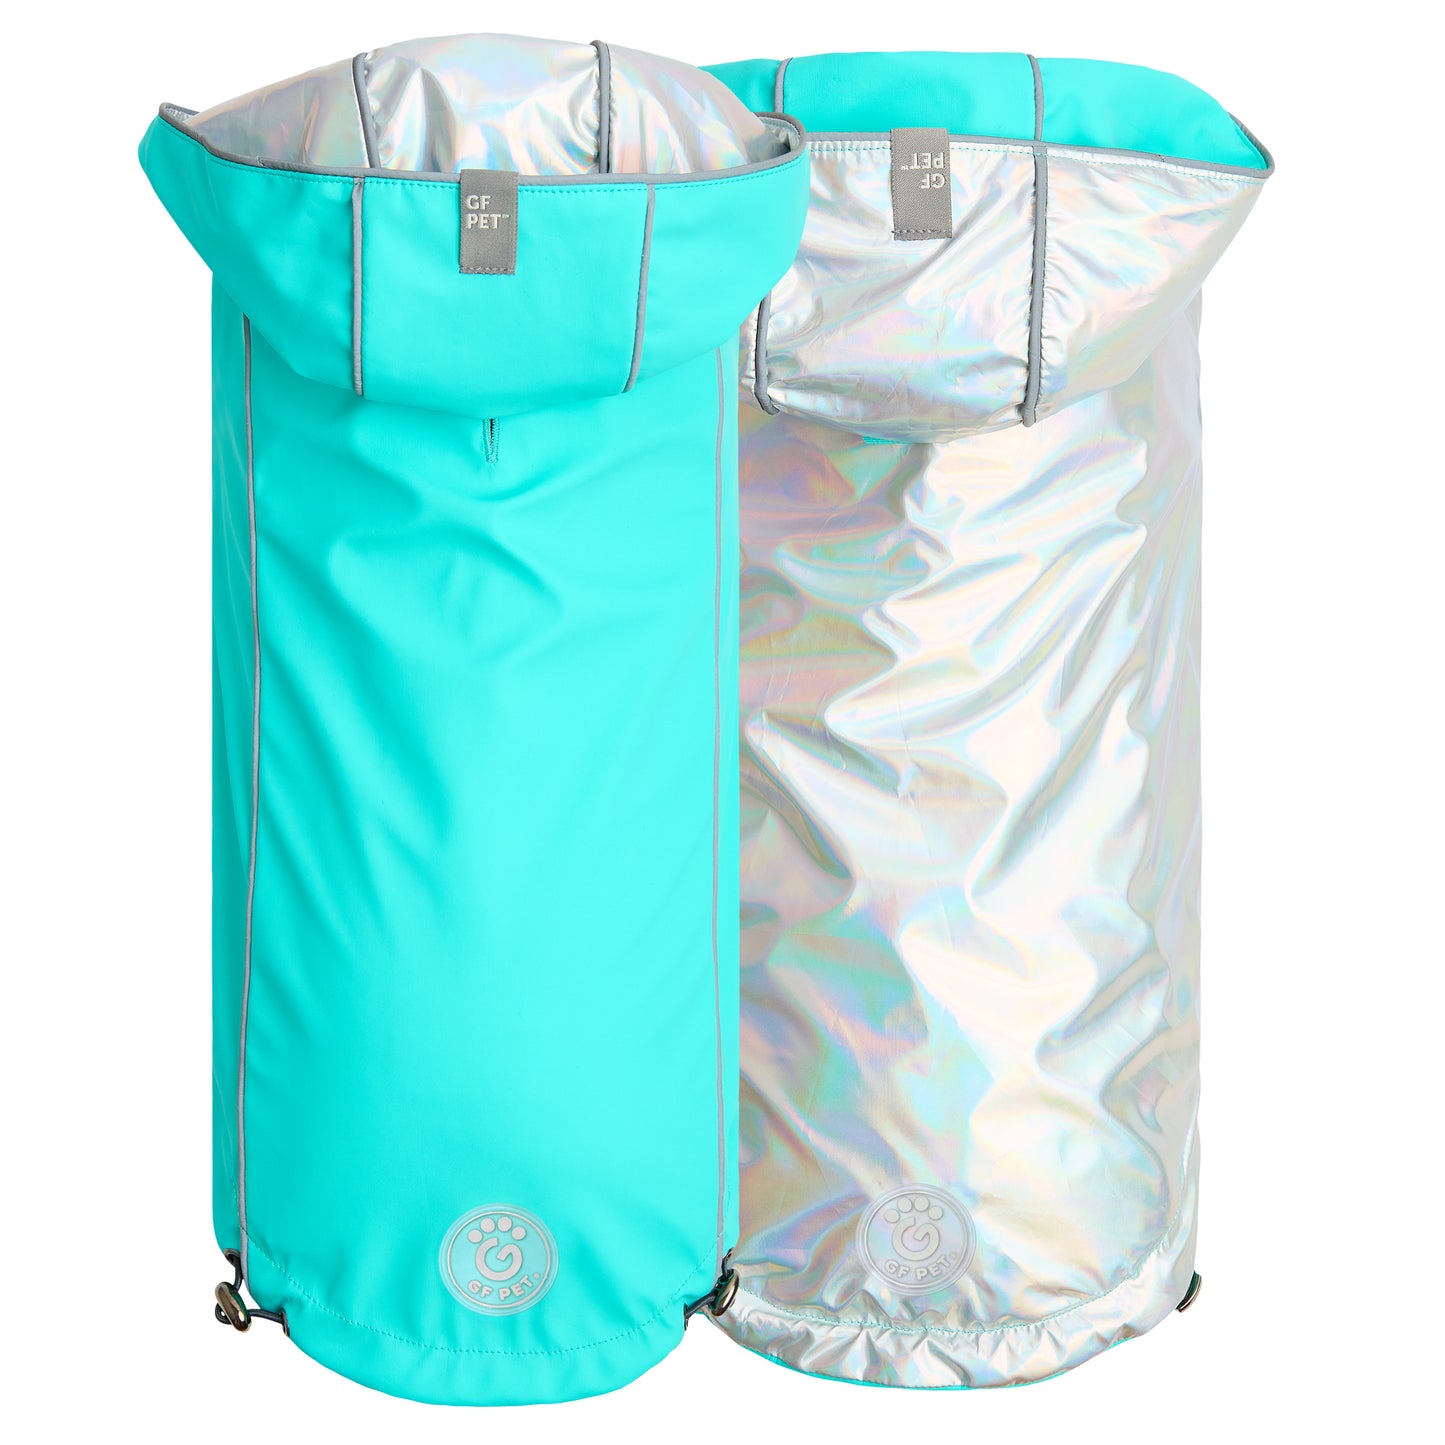 Reversible Raincoat - Neon Aqua with Iridescent